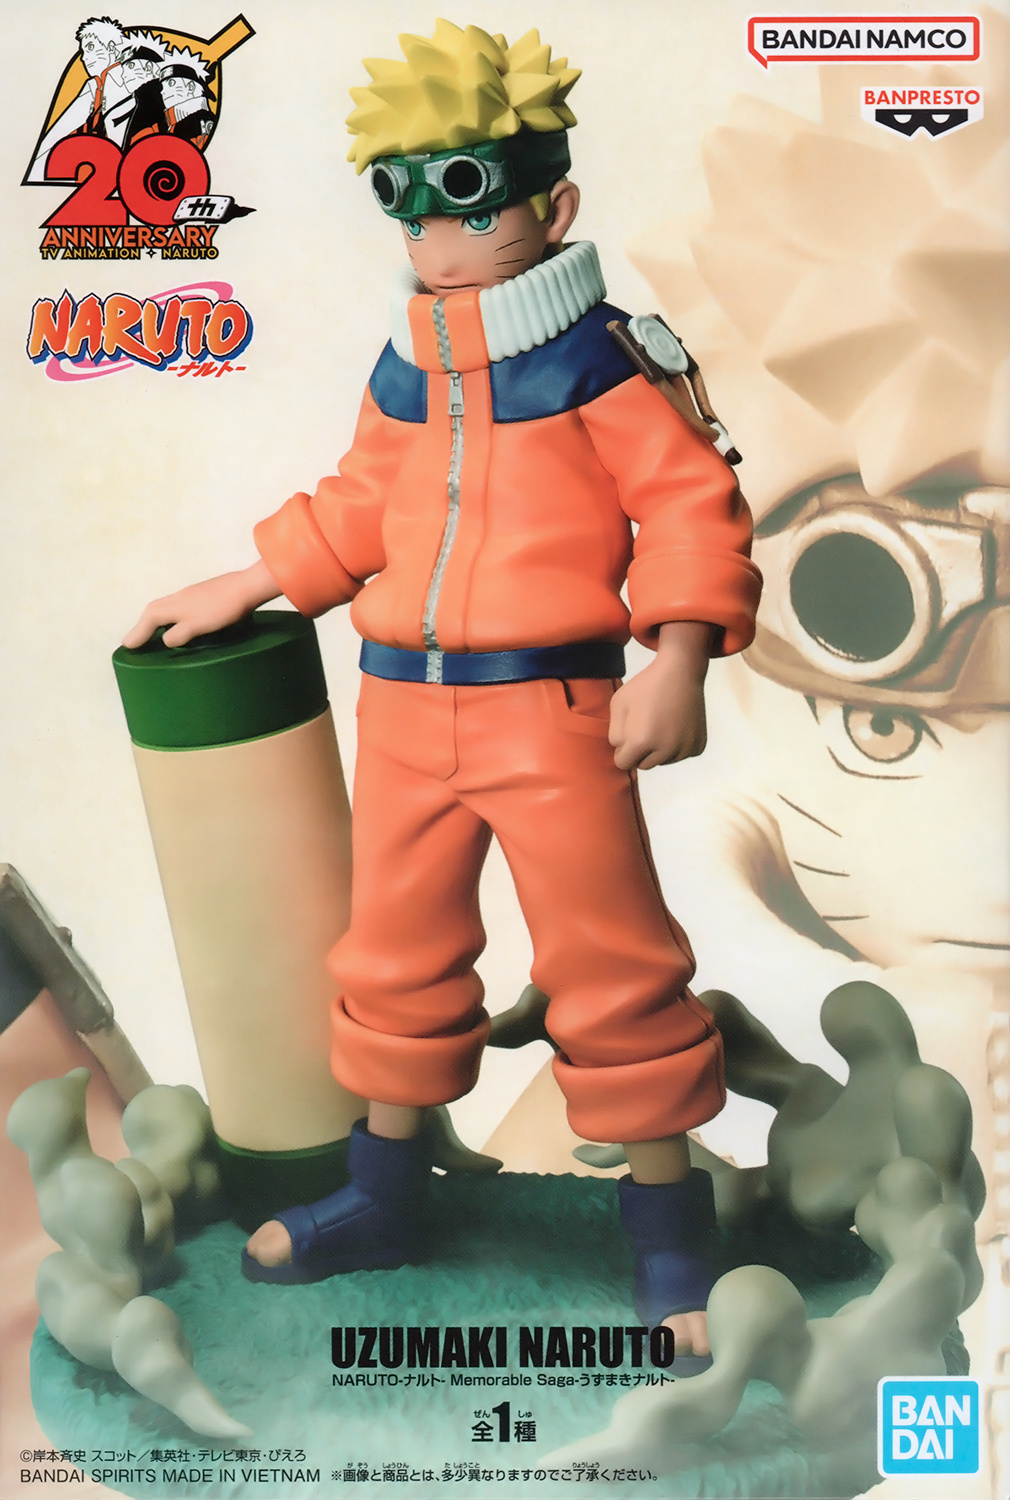 [Pre-order] Banpresto "Naruto" Memorable Saga Uzumaki Naruto